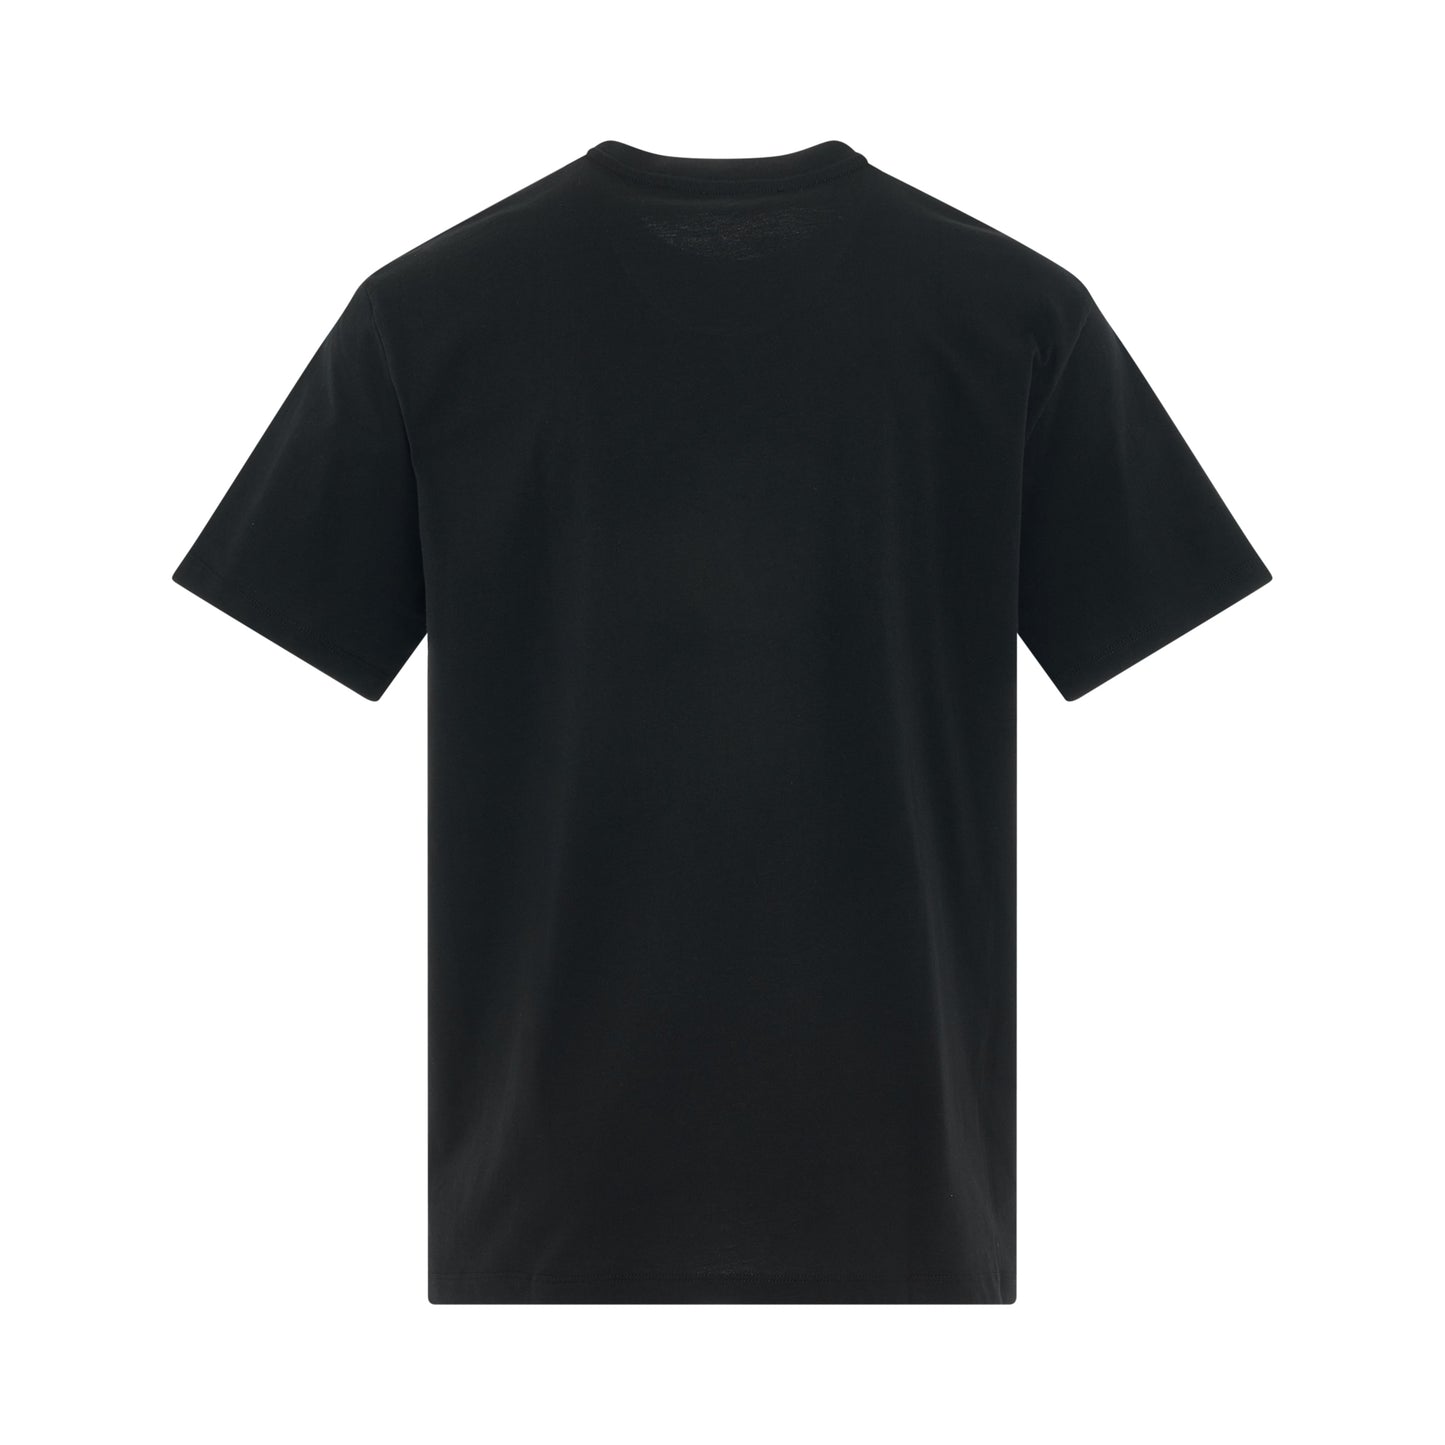 Logo Flock & Foil T-Shirt in Black/Silver